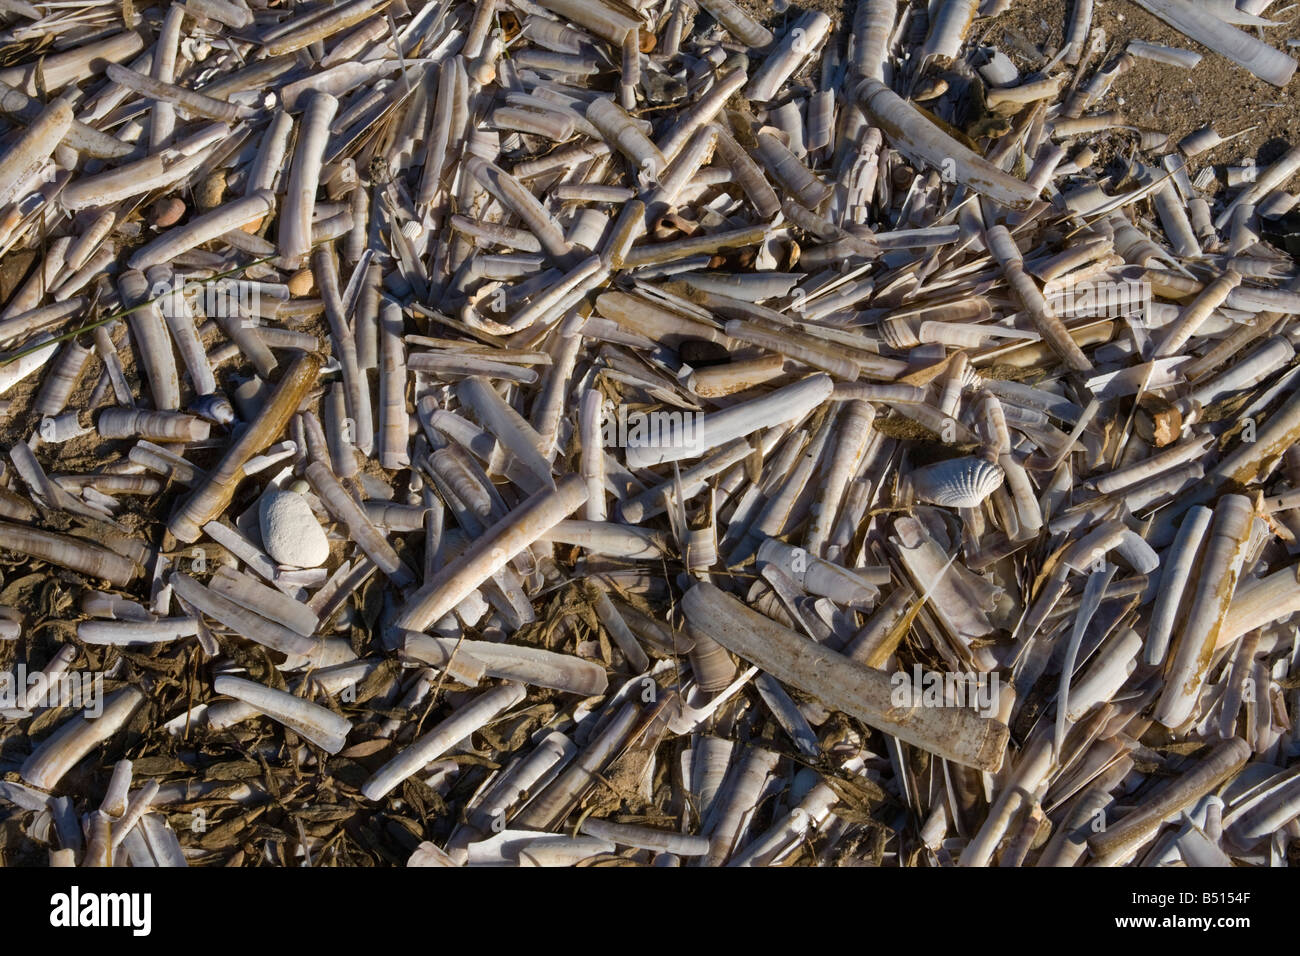 razor shells washed up on a beach Stock Photo